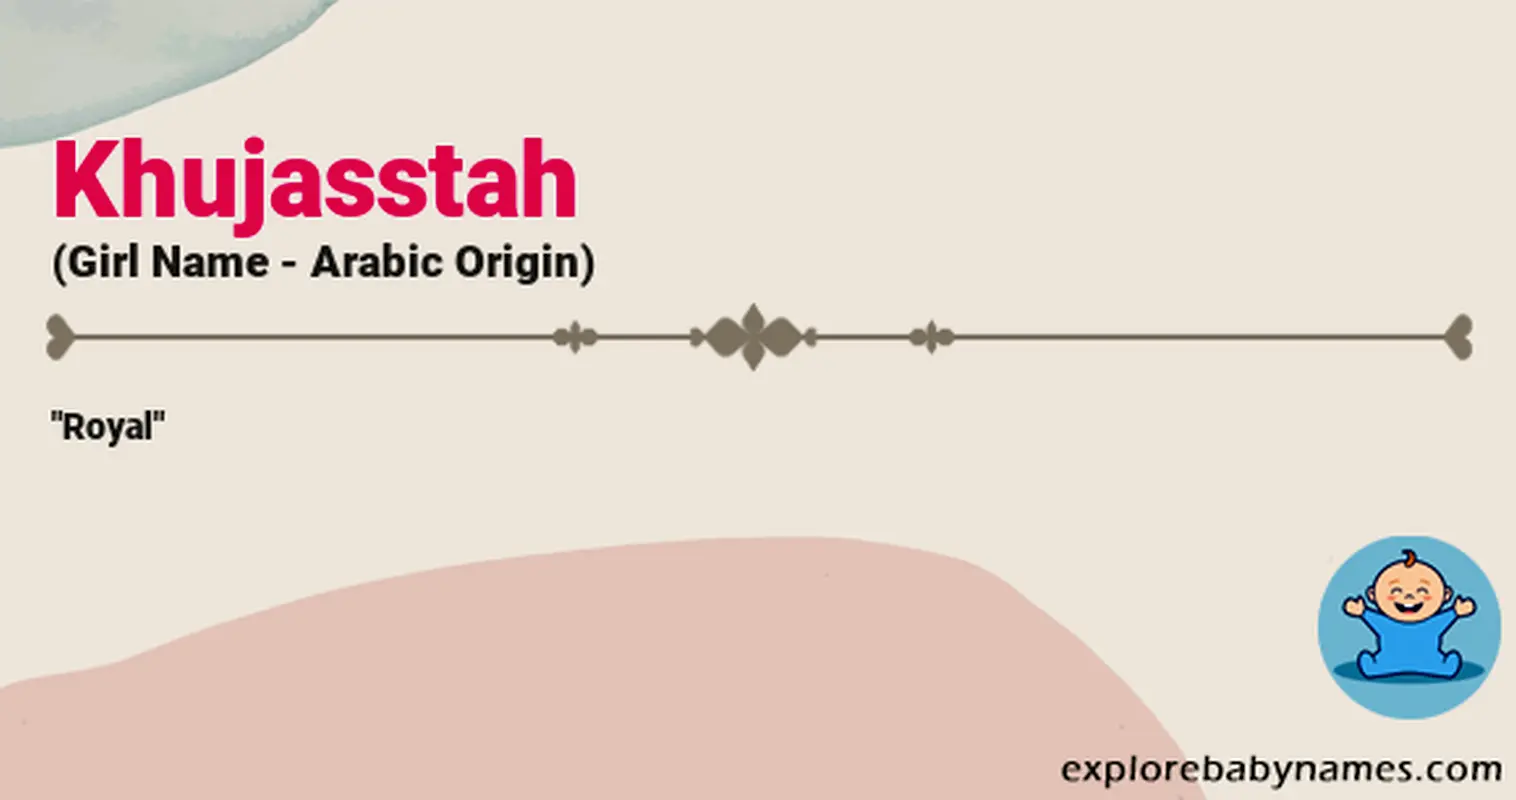 Meaning of Khujasstah